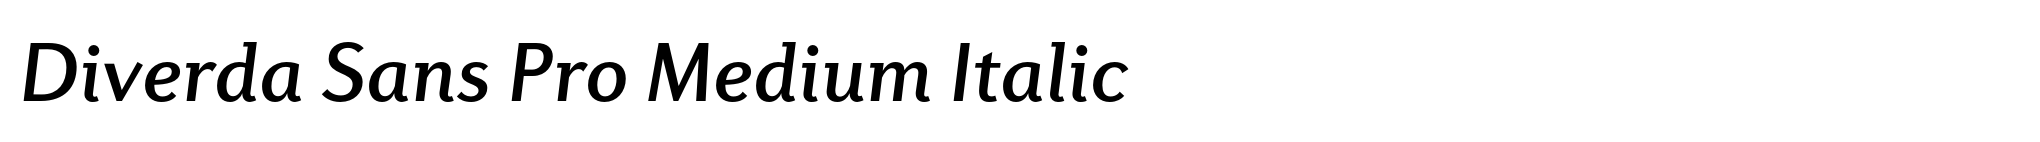 Diverda Sans Pro Medium Italic image